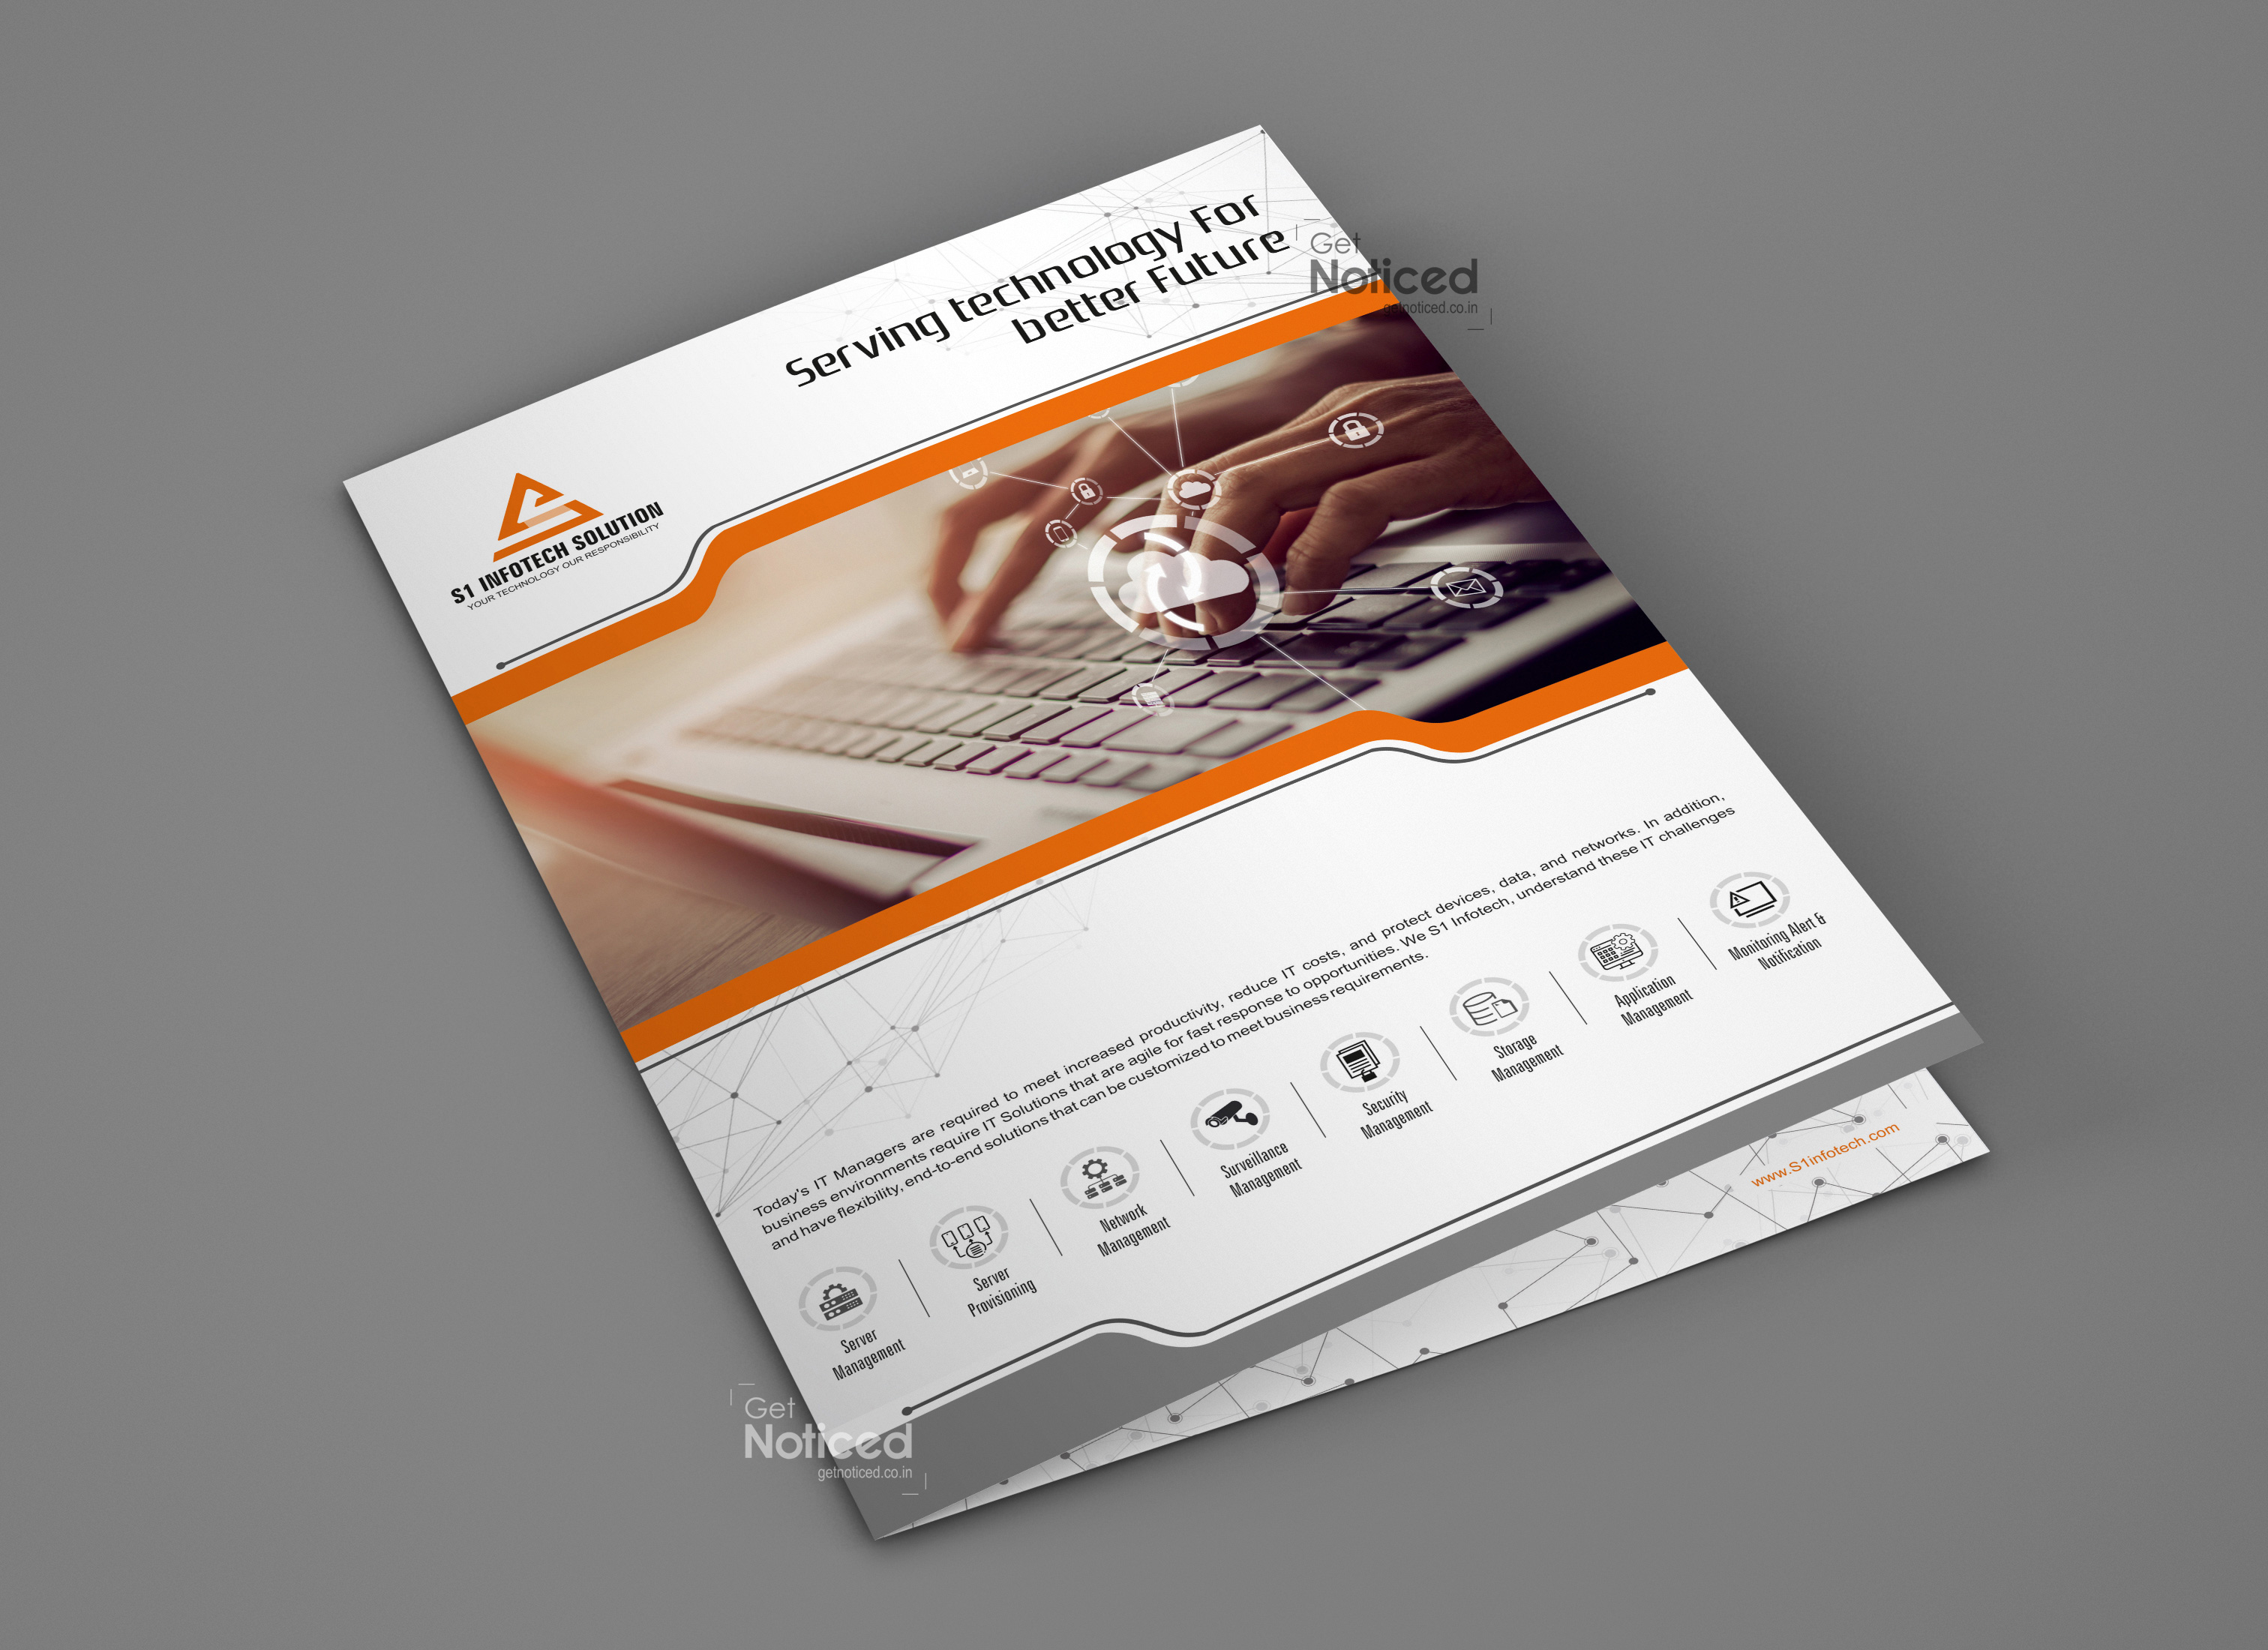 S1 Infotech Solutions Corporate Brochure Design